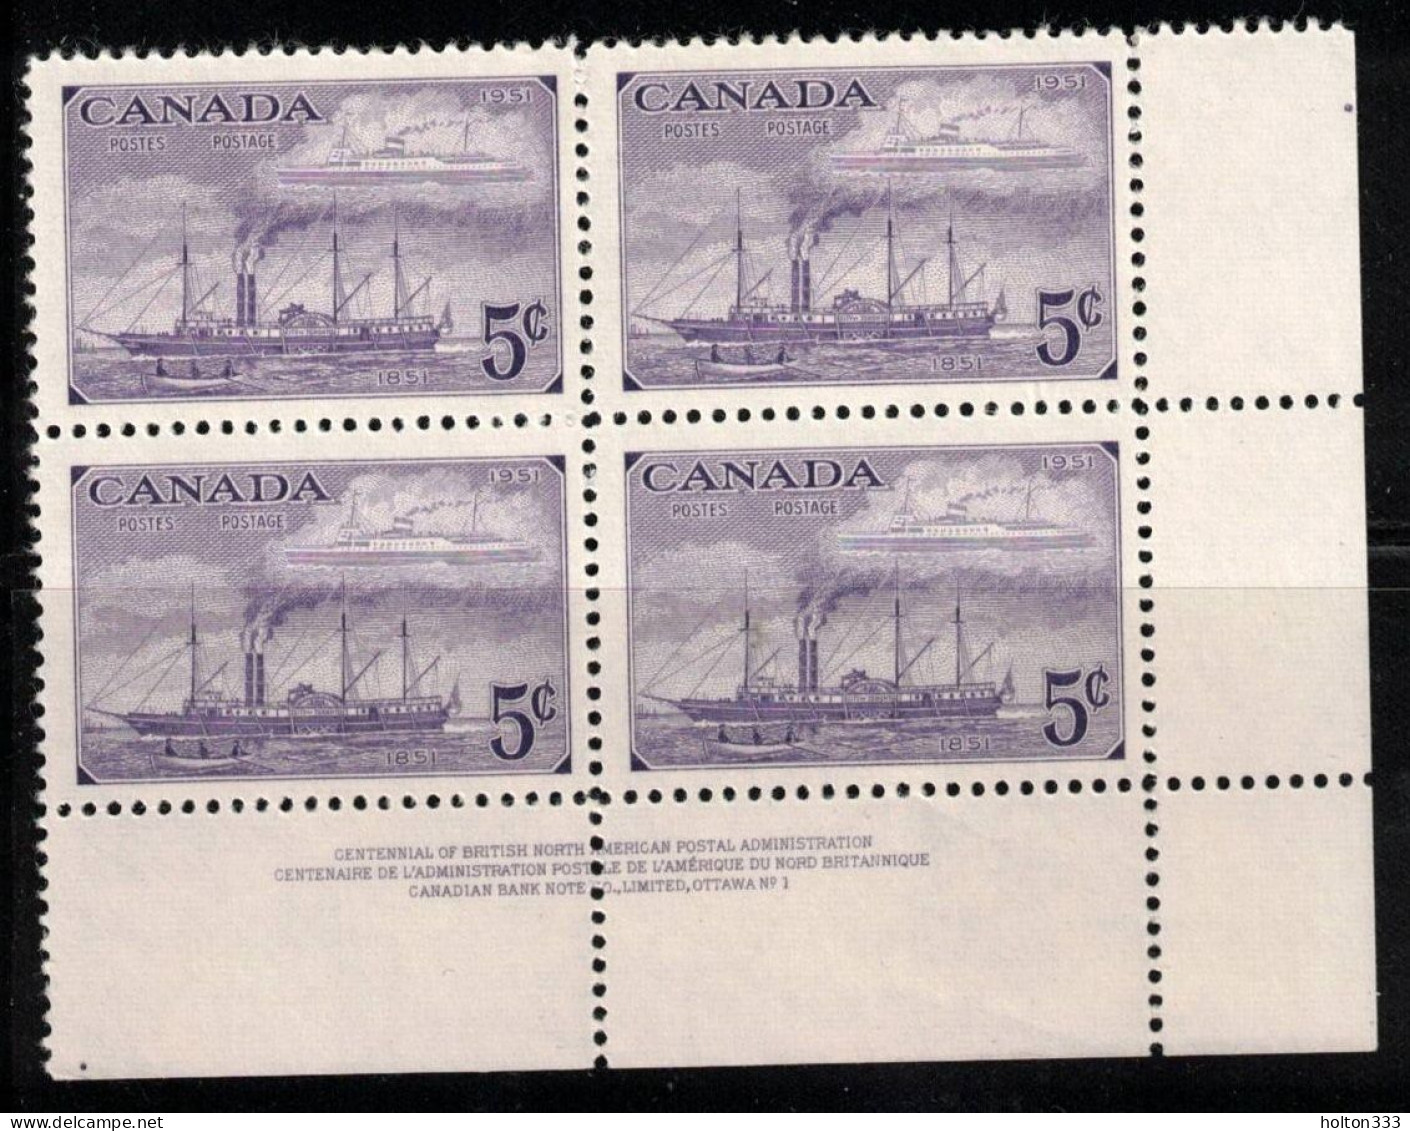 CANADA Scott # 312 MNH - Stamp Centennial LR Plate Block - Unused Stamps